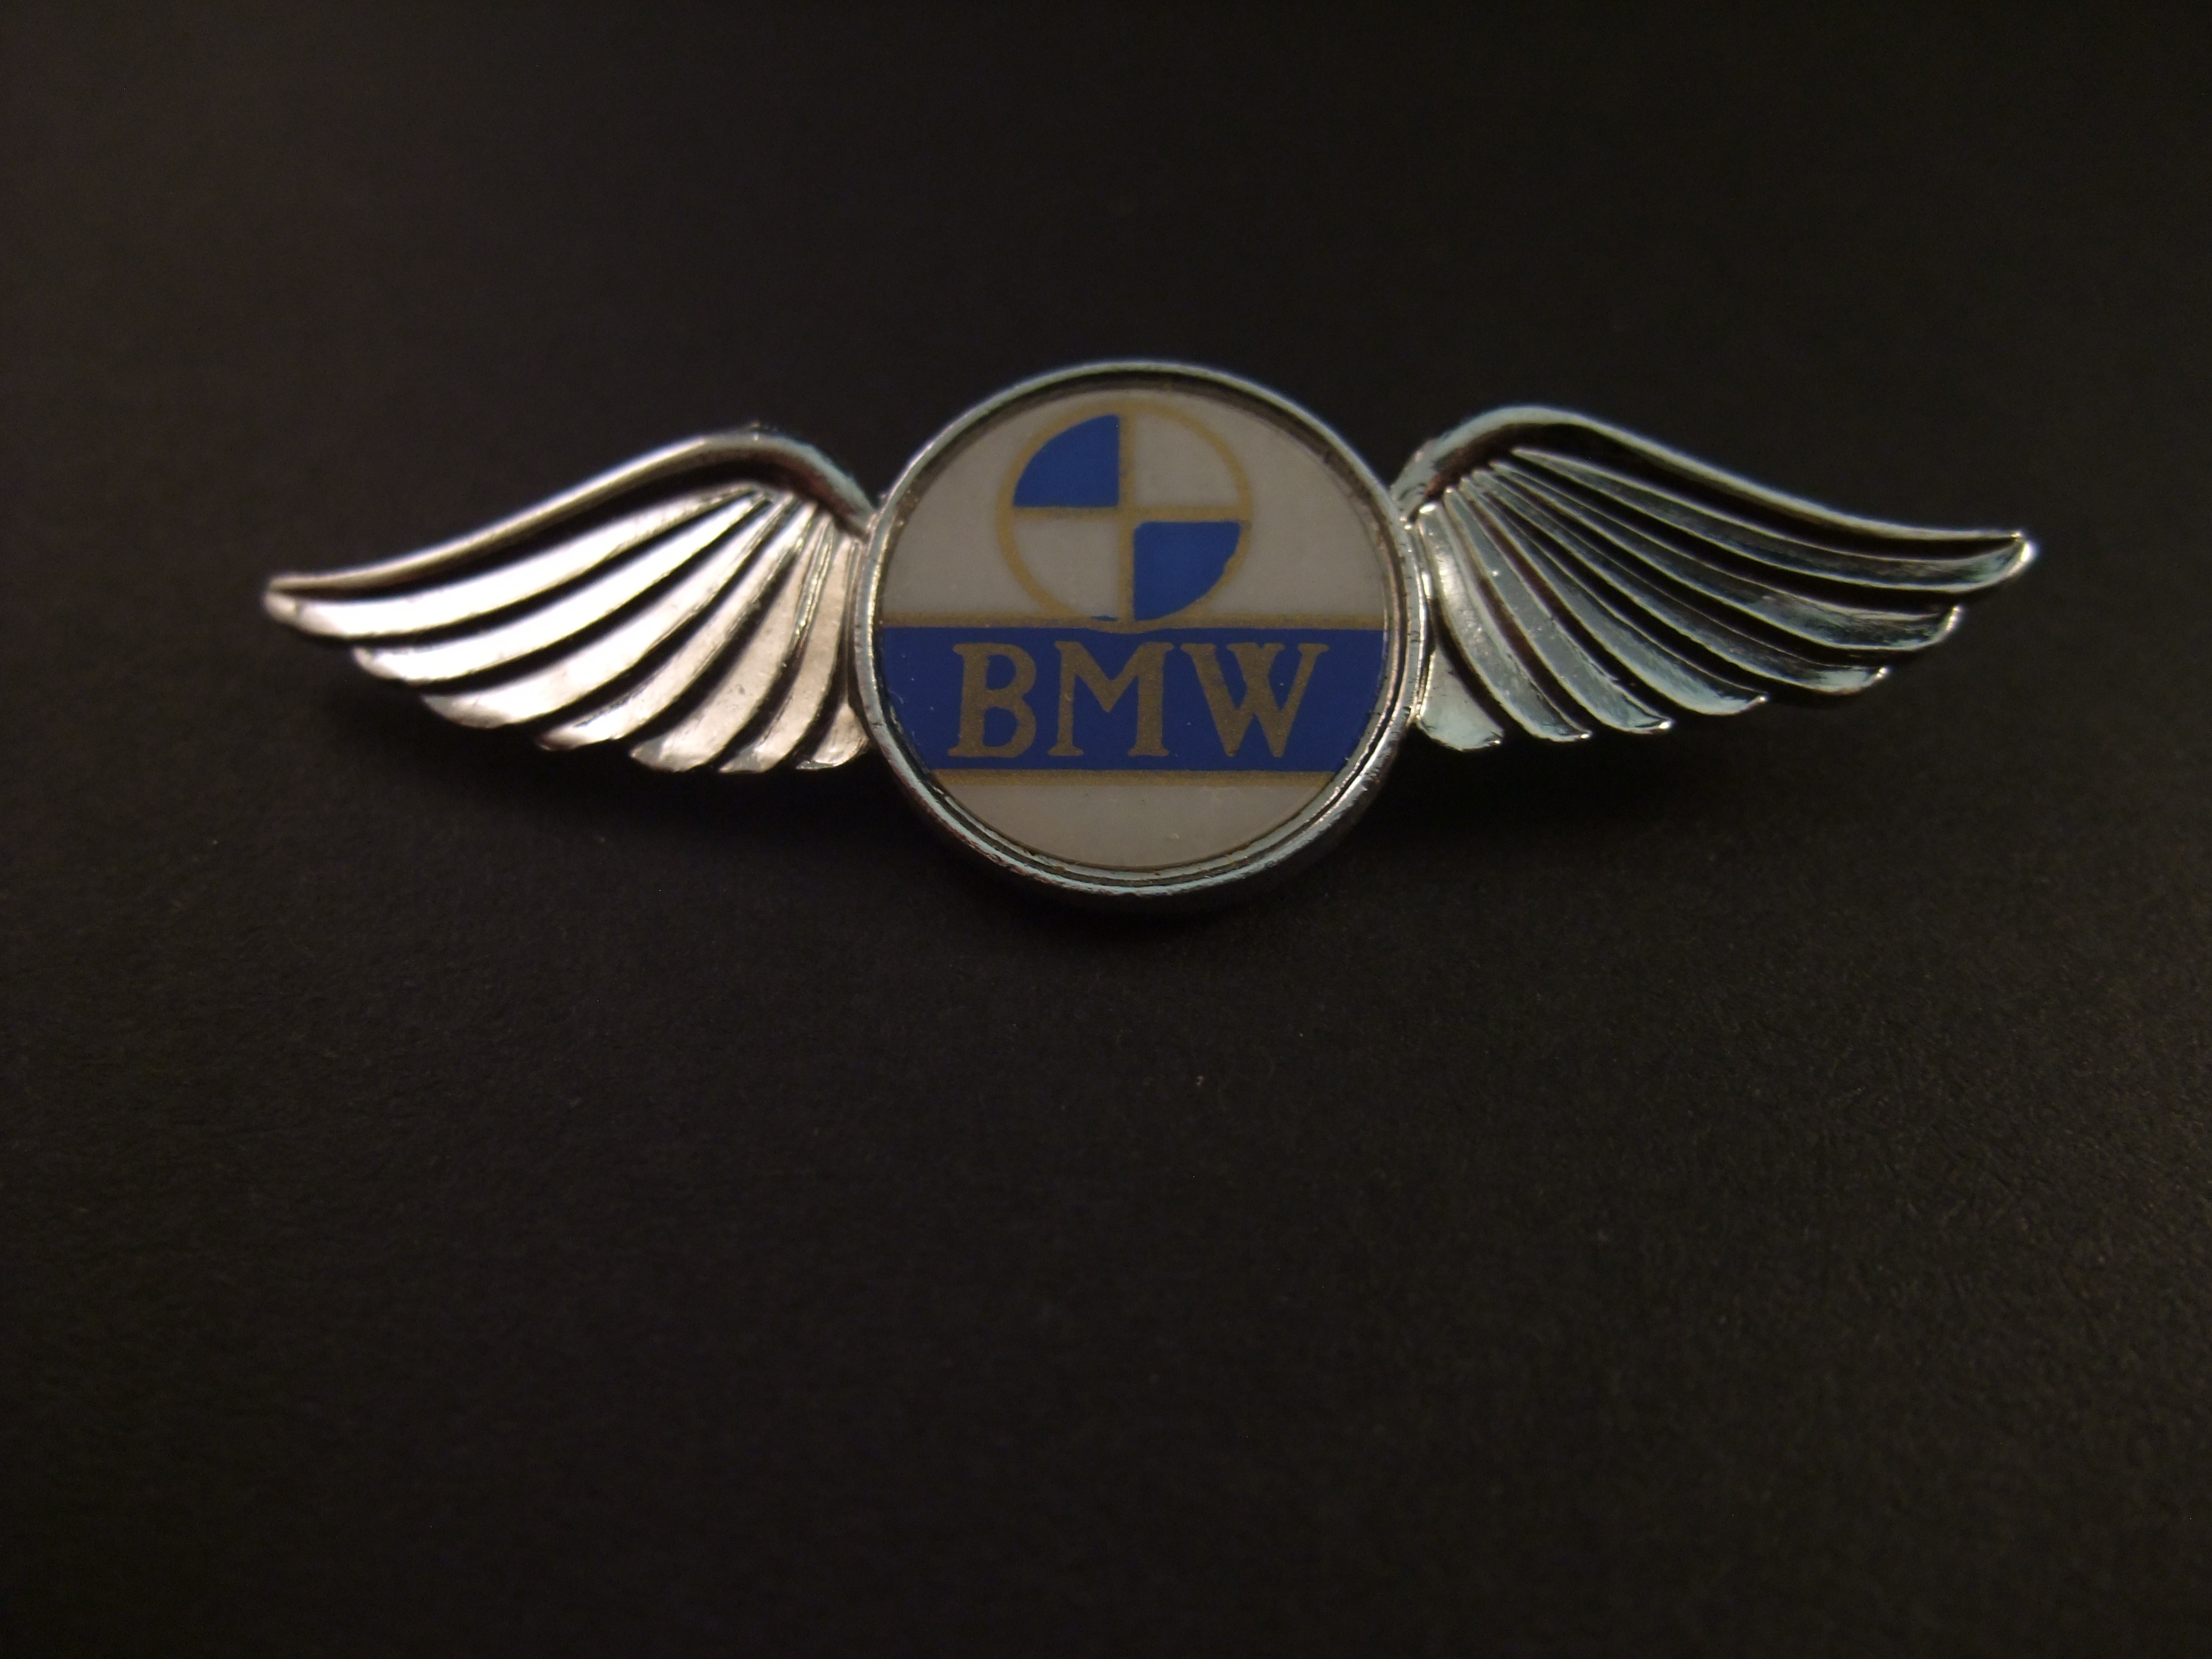 BMW motorfietsen( Motorrad) logo wing